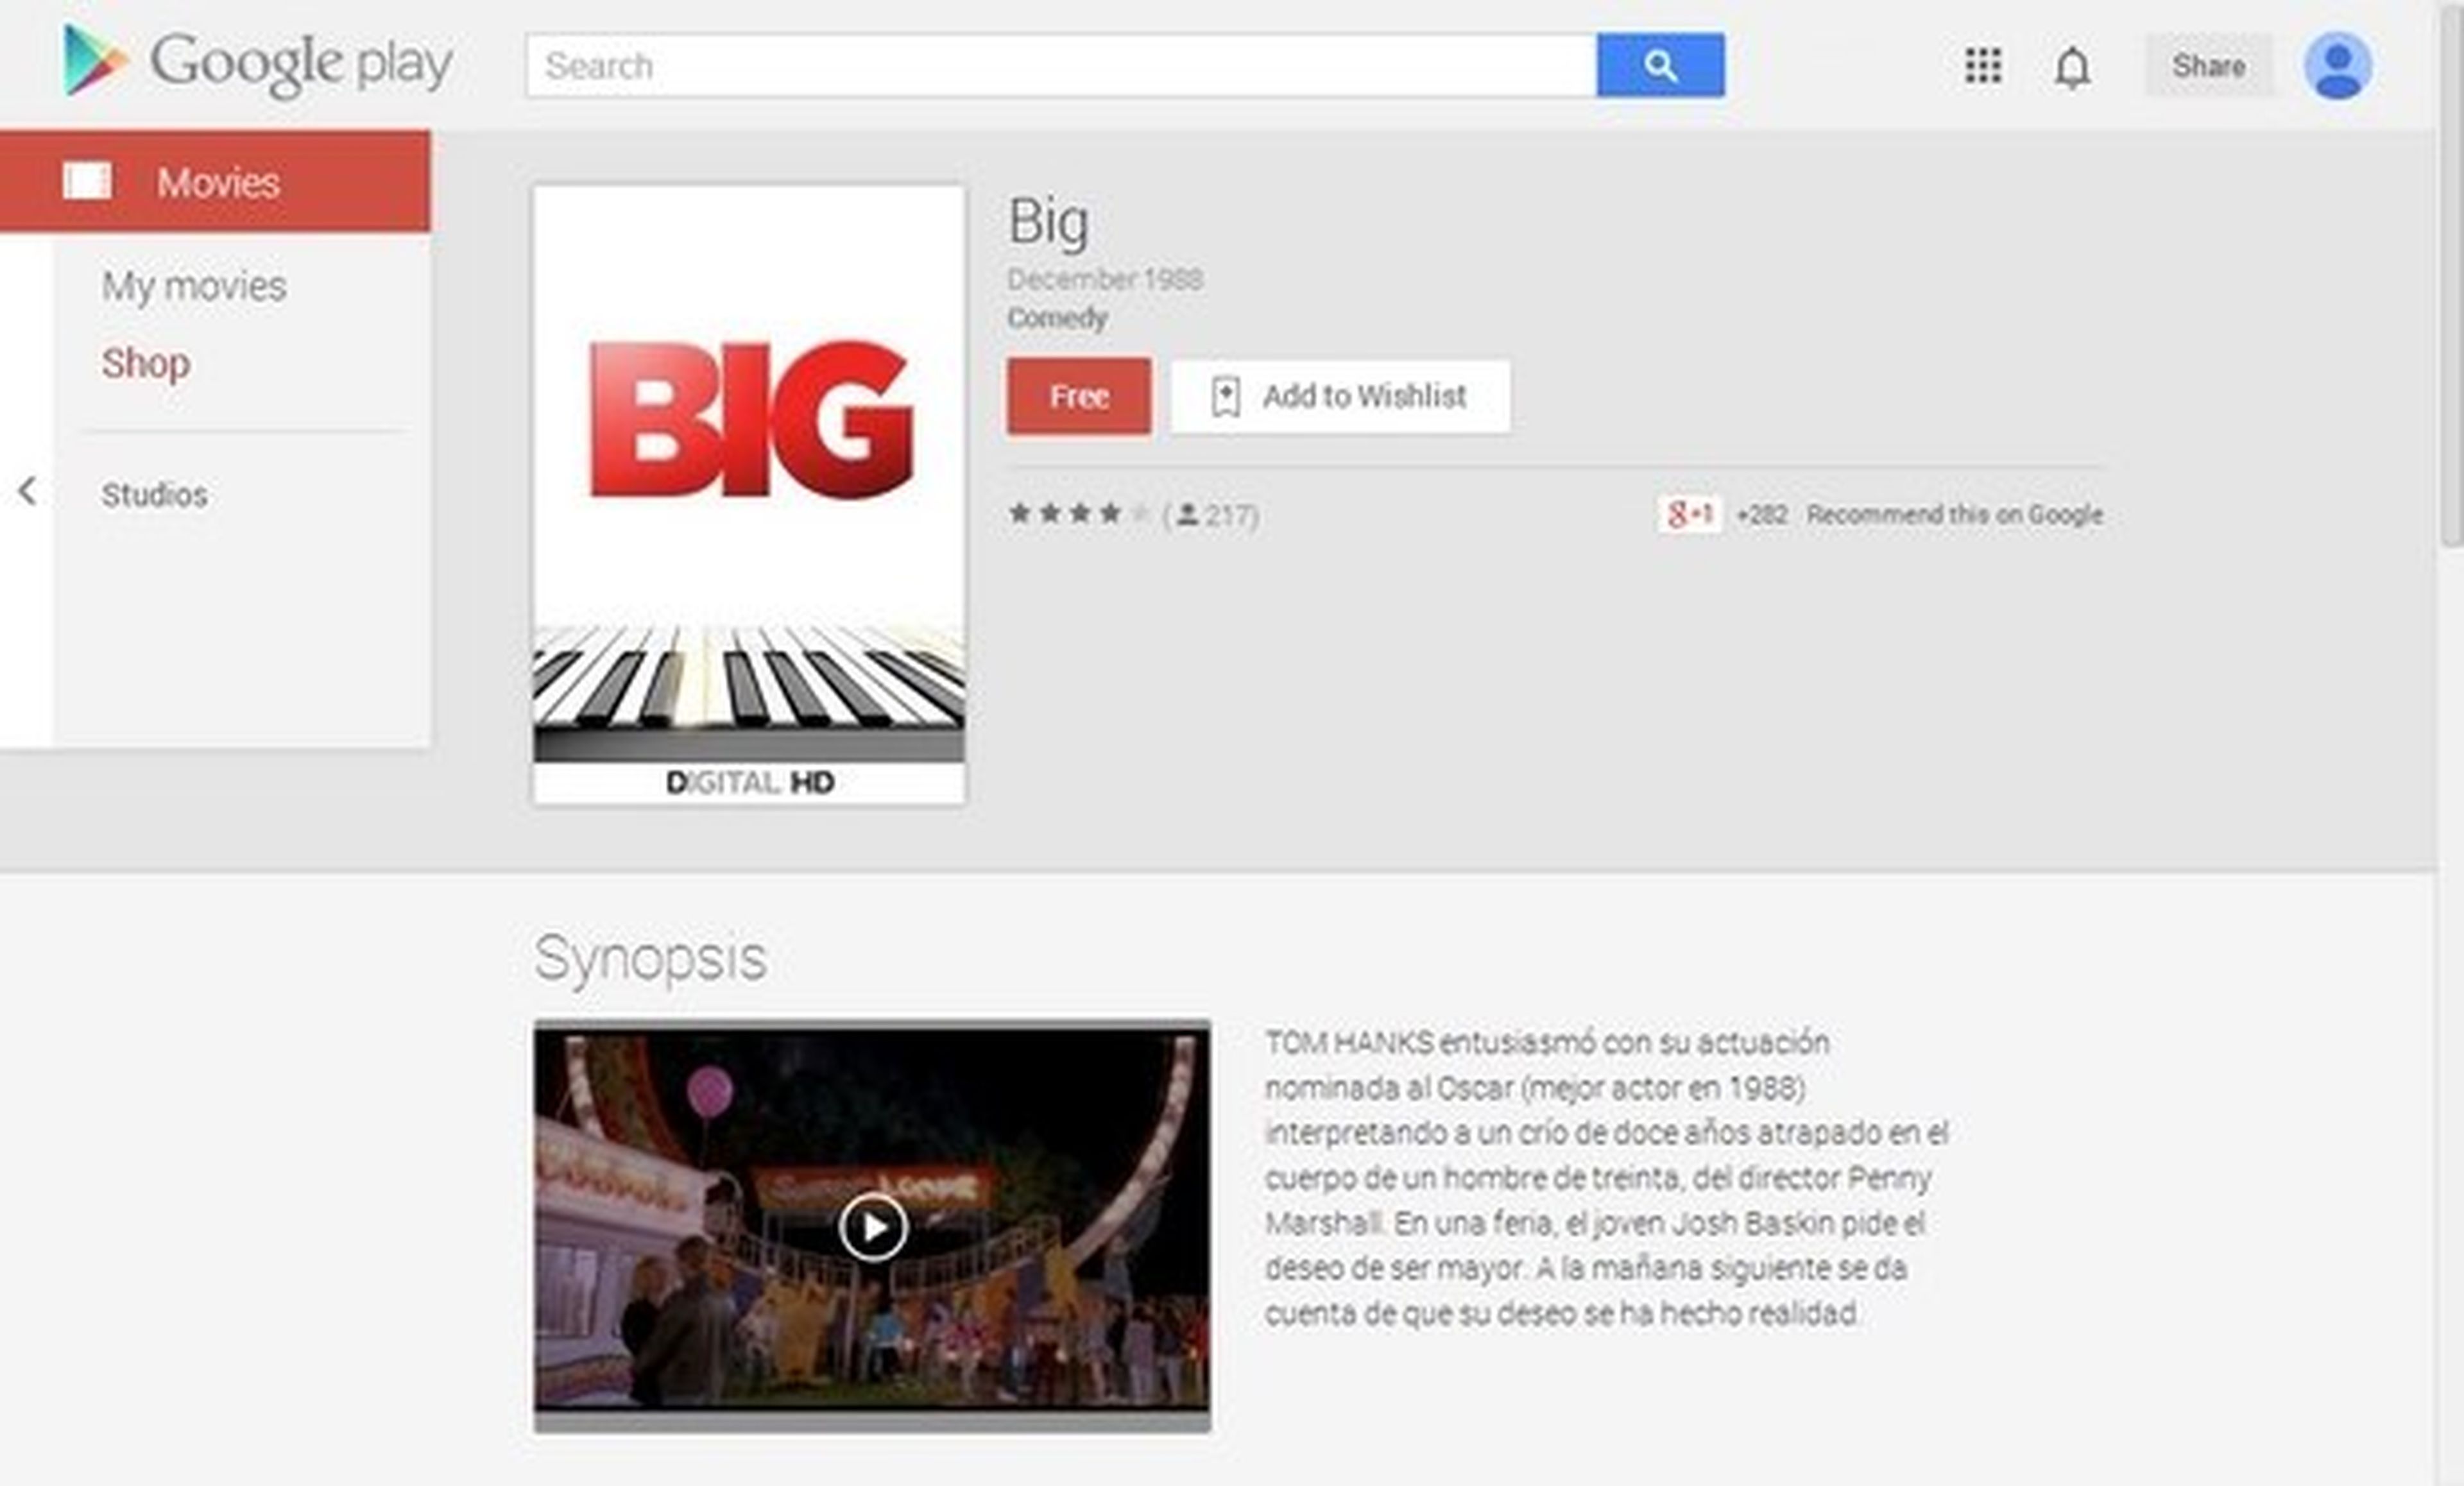 Big, gratis en Google Play